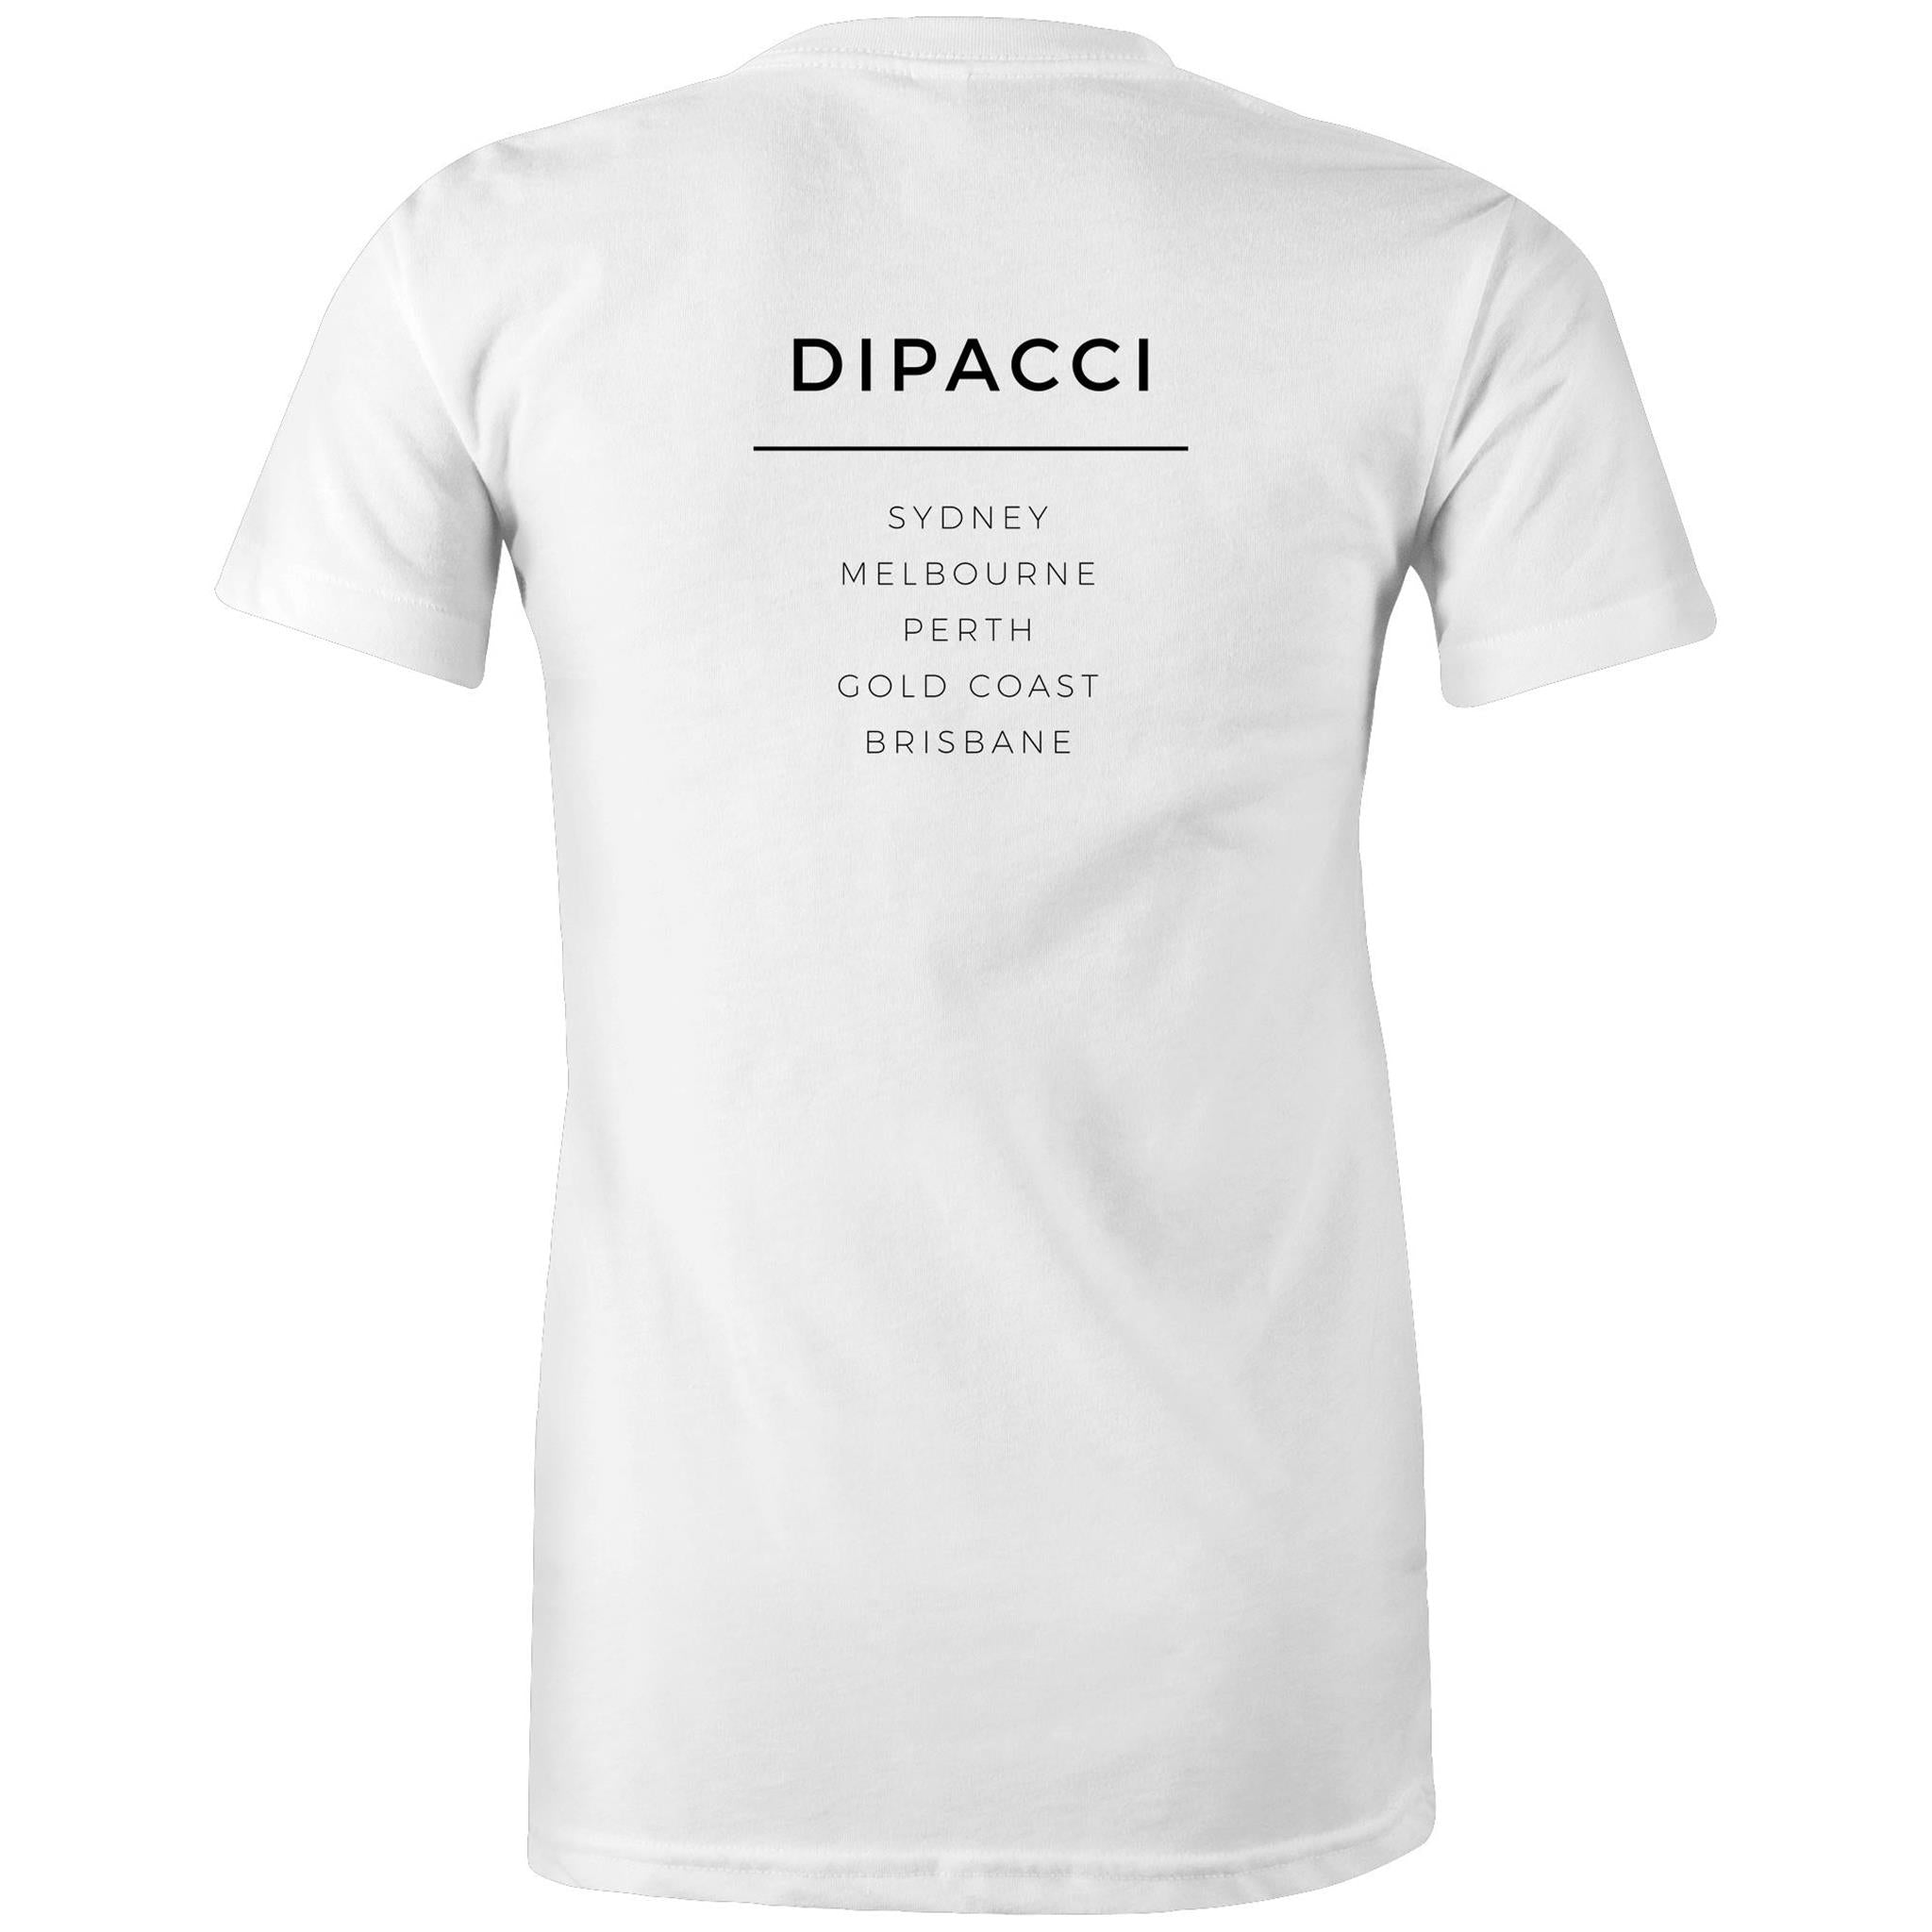 Dipacci - Women's Maple Tee